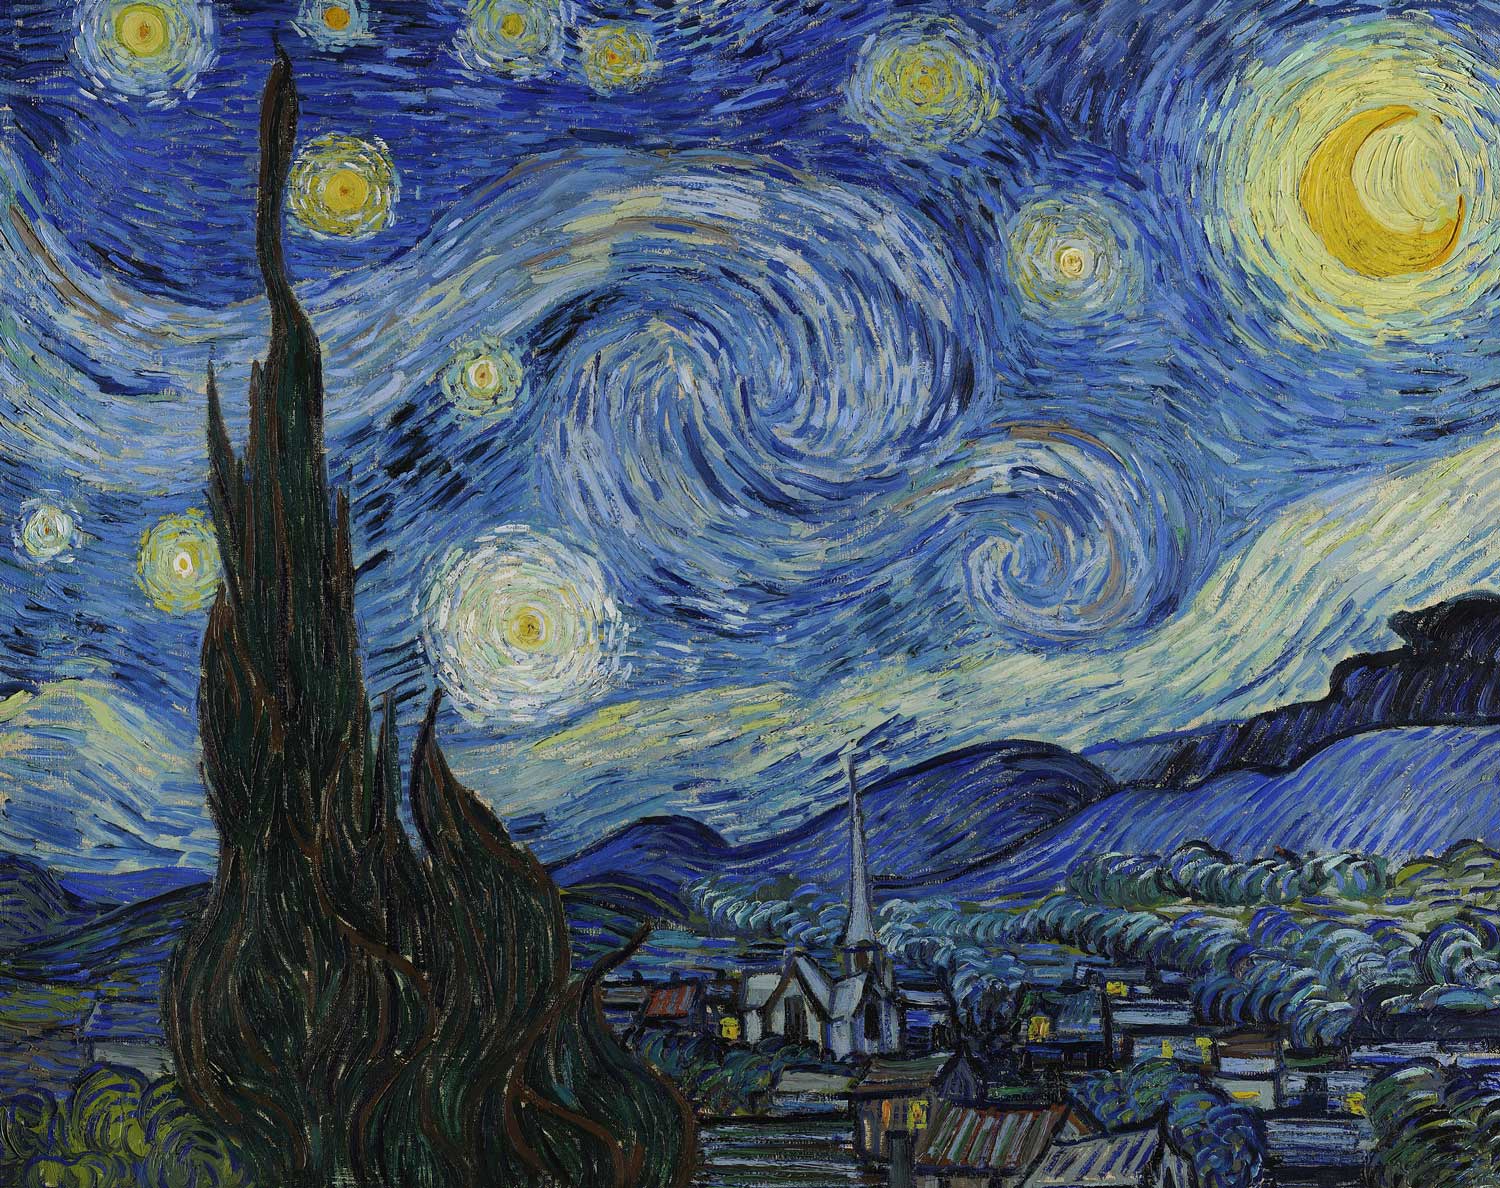 Vincent van Gogh’s The Starry Night